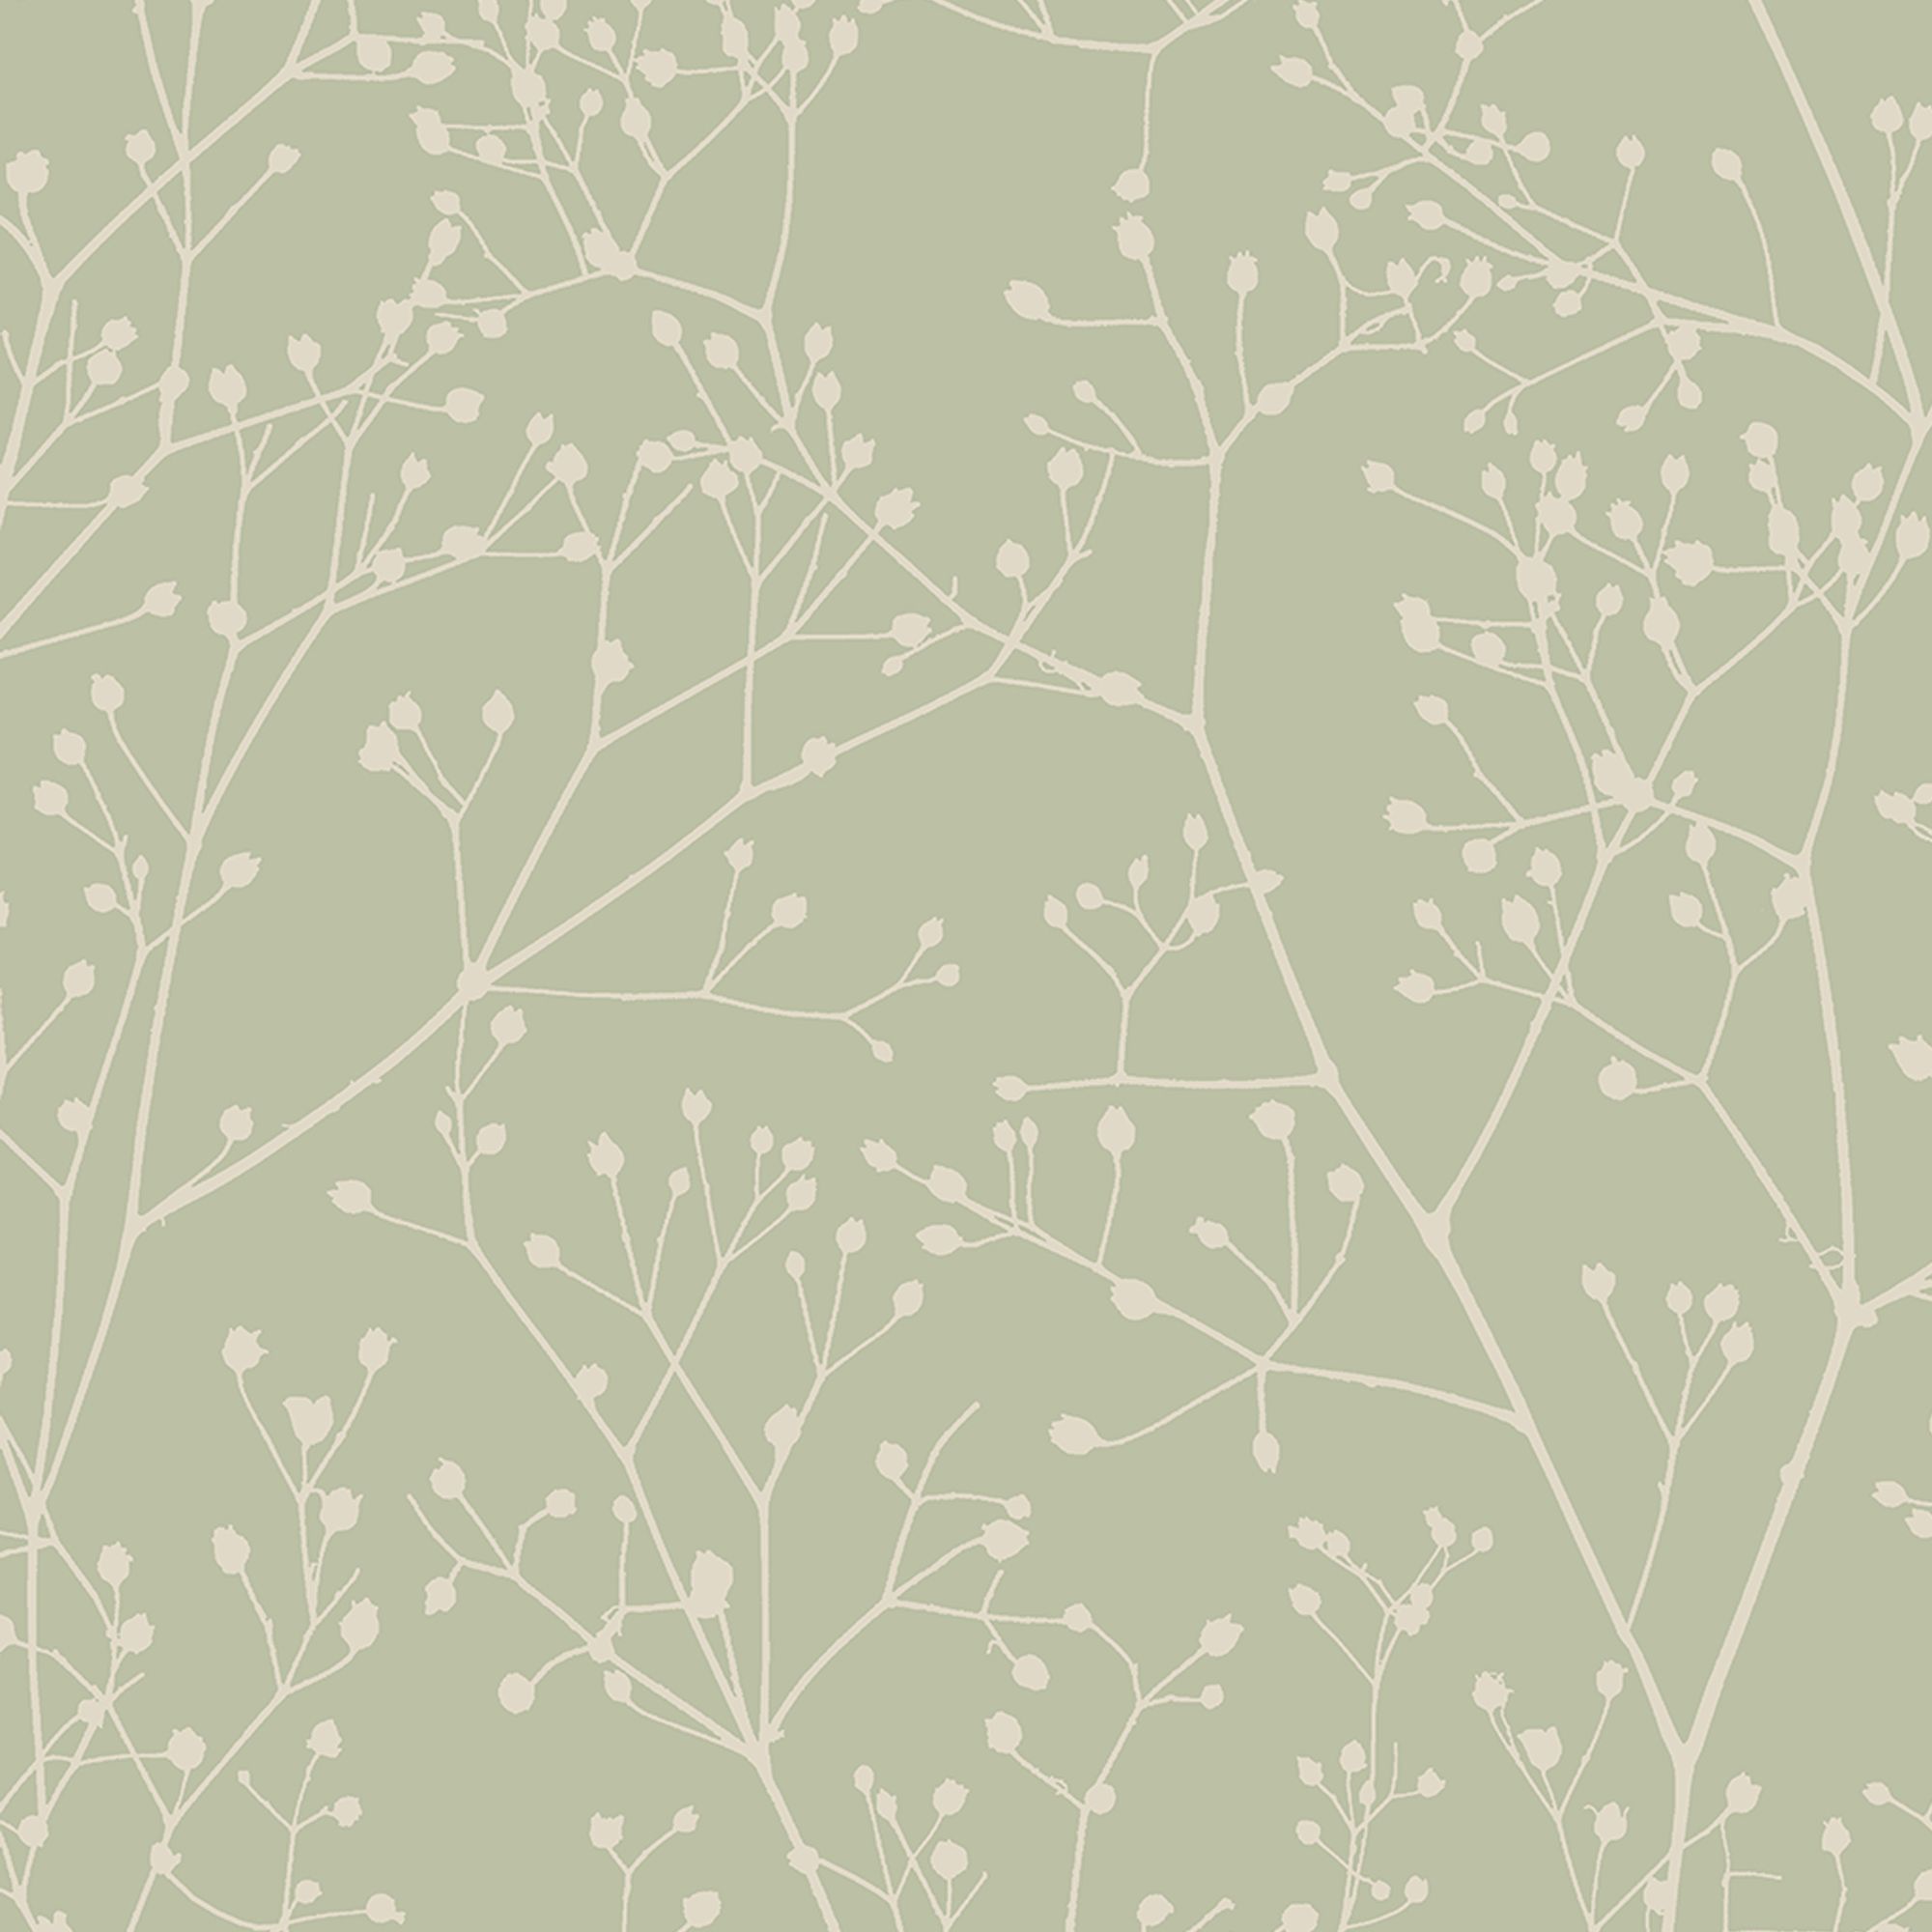 Clarissa Hulse Gypsophila Spring Green & Silver effect Smooth Wallpaper